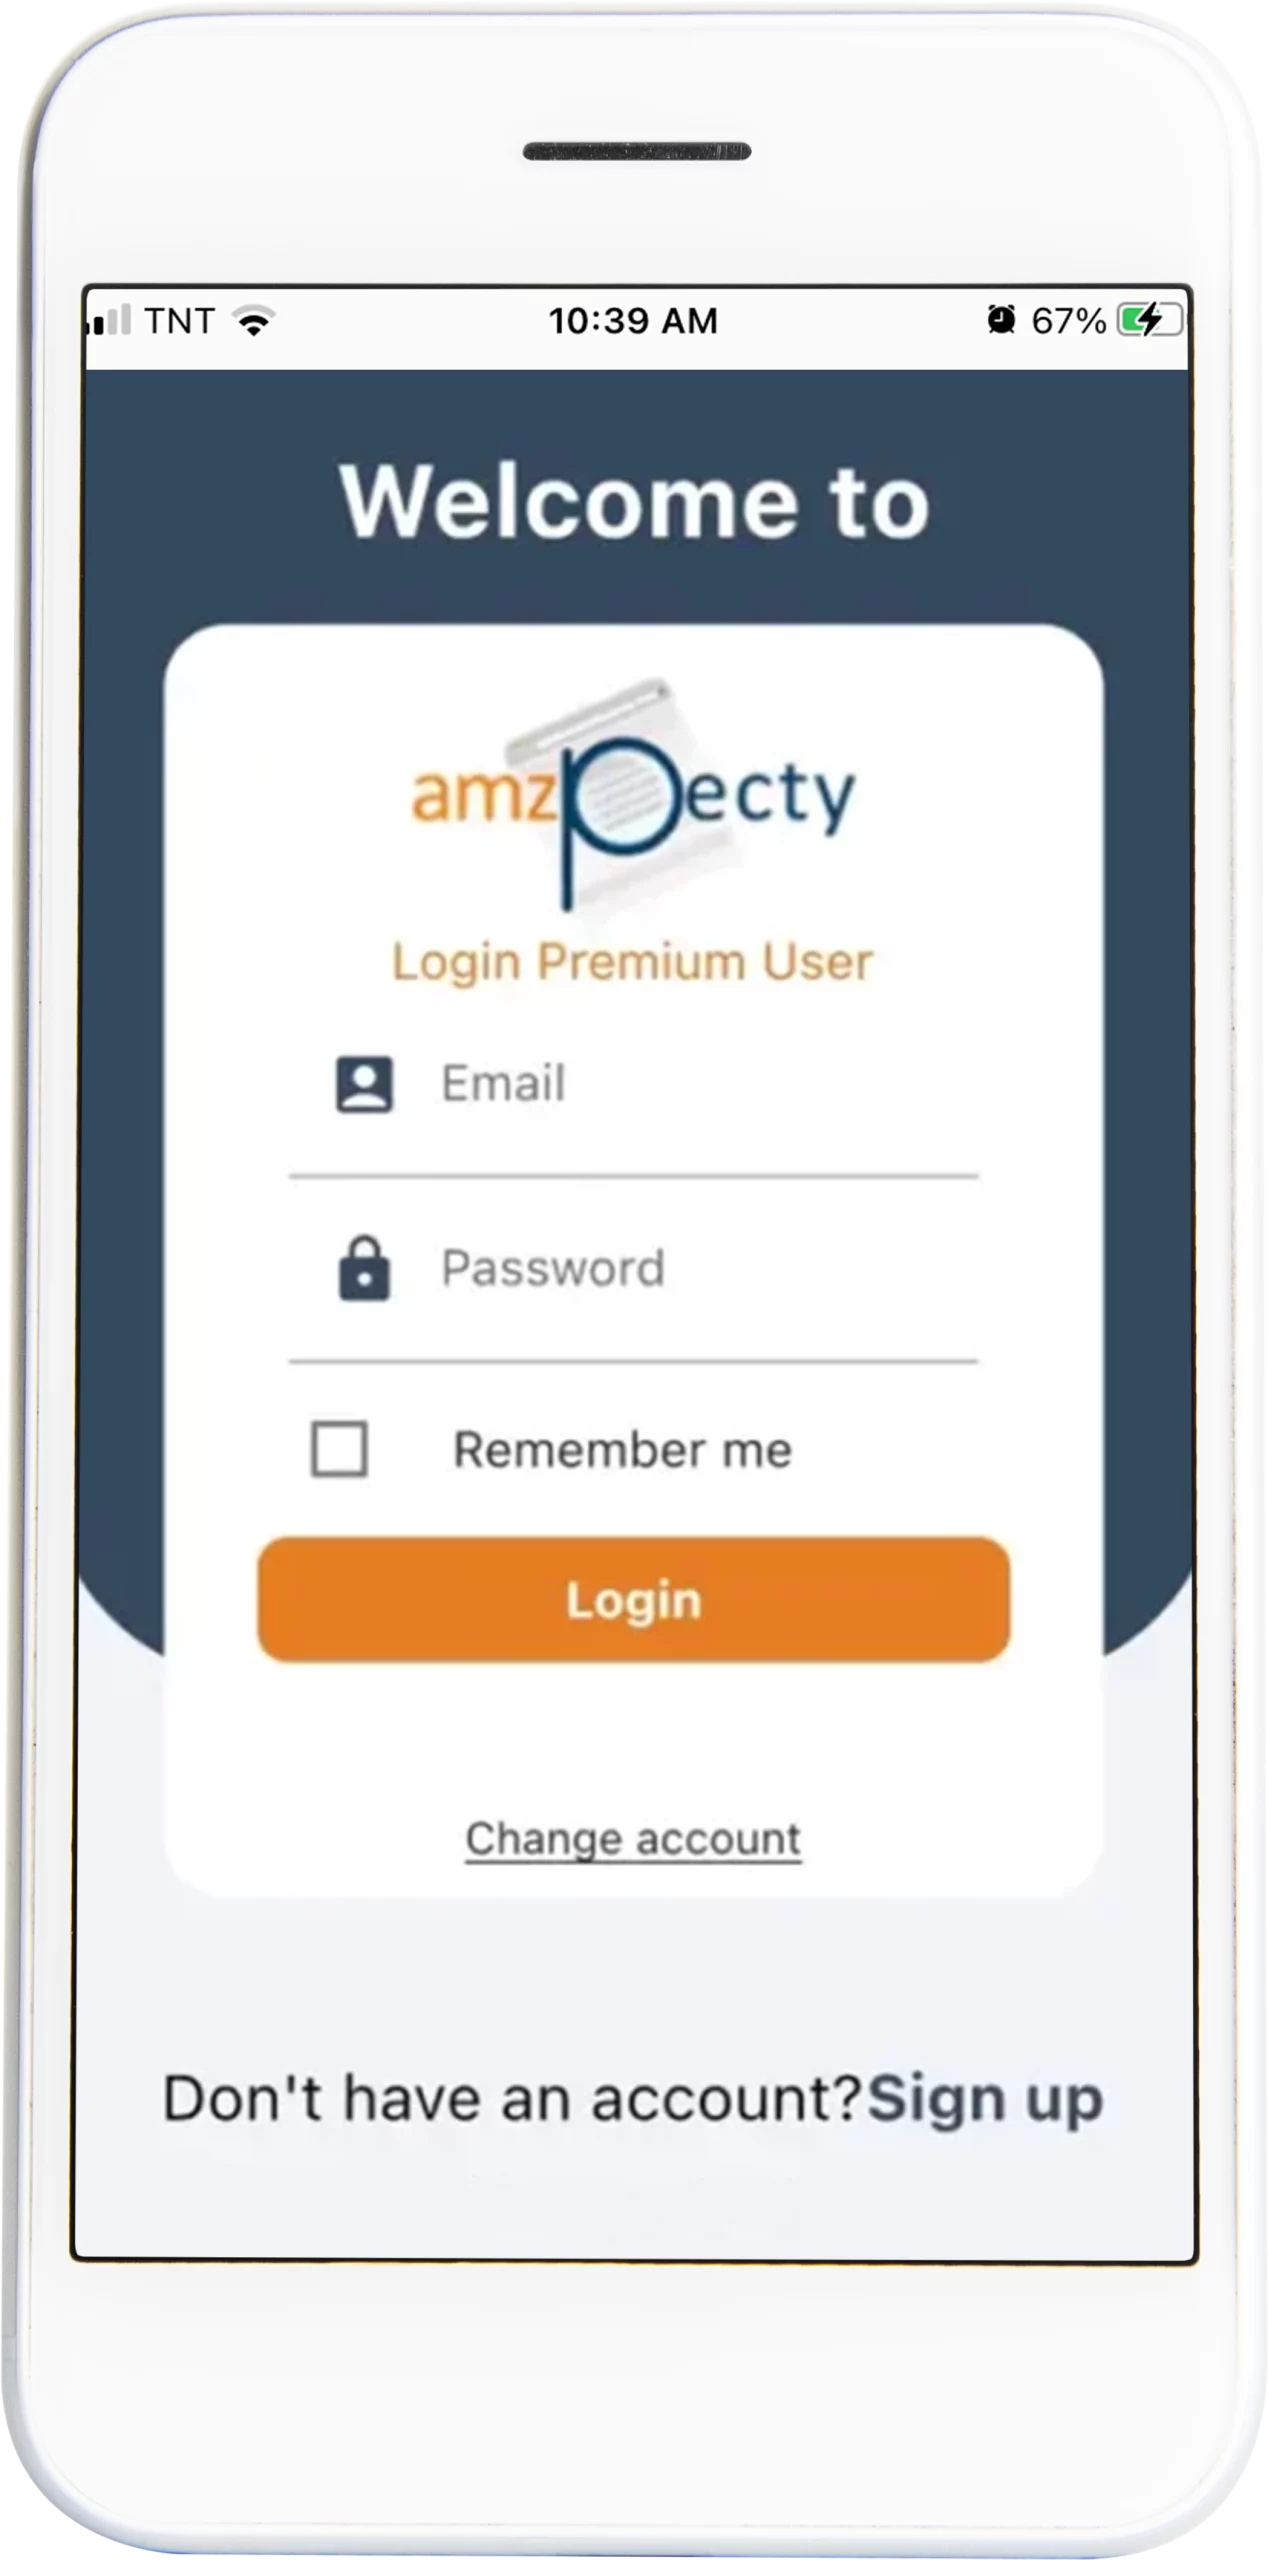 Application mobile Amzpecty